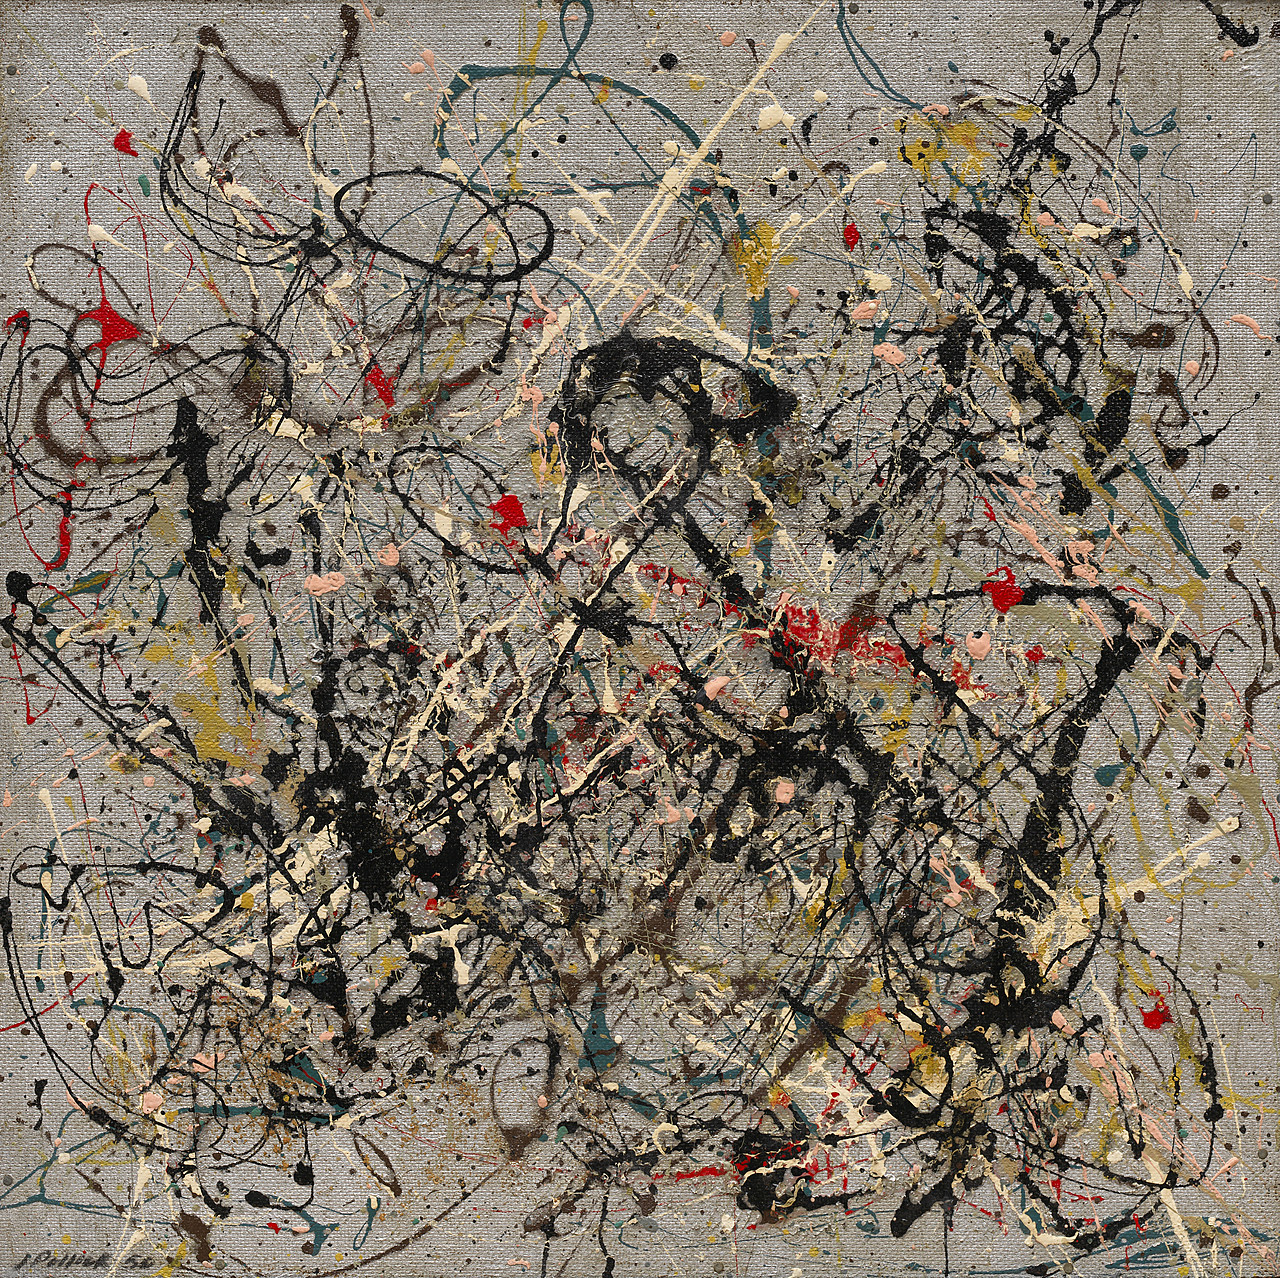 Jackson Pollock, Number 18